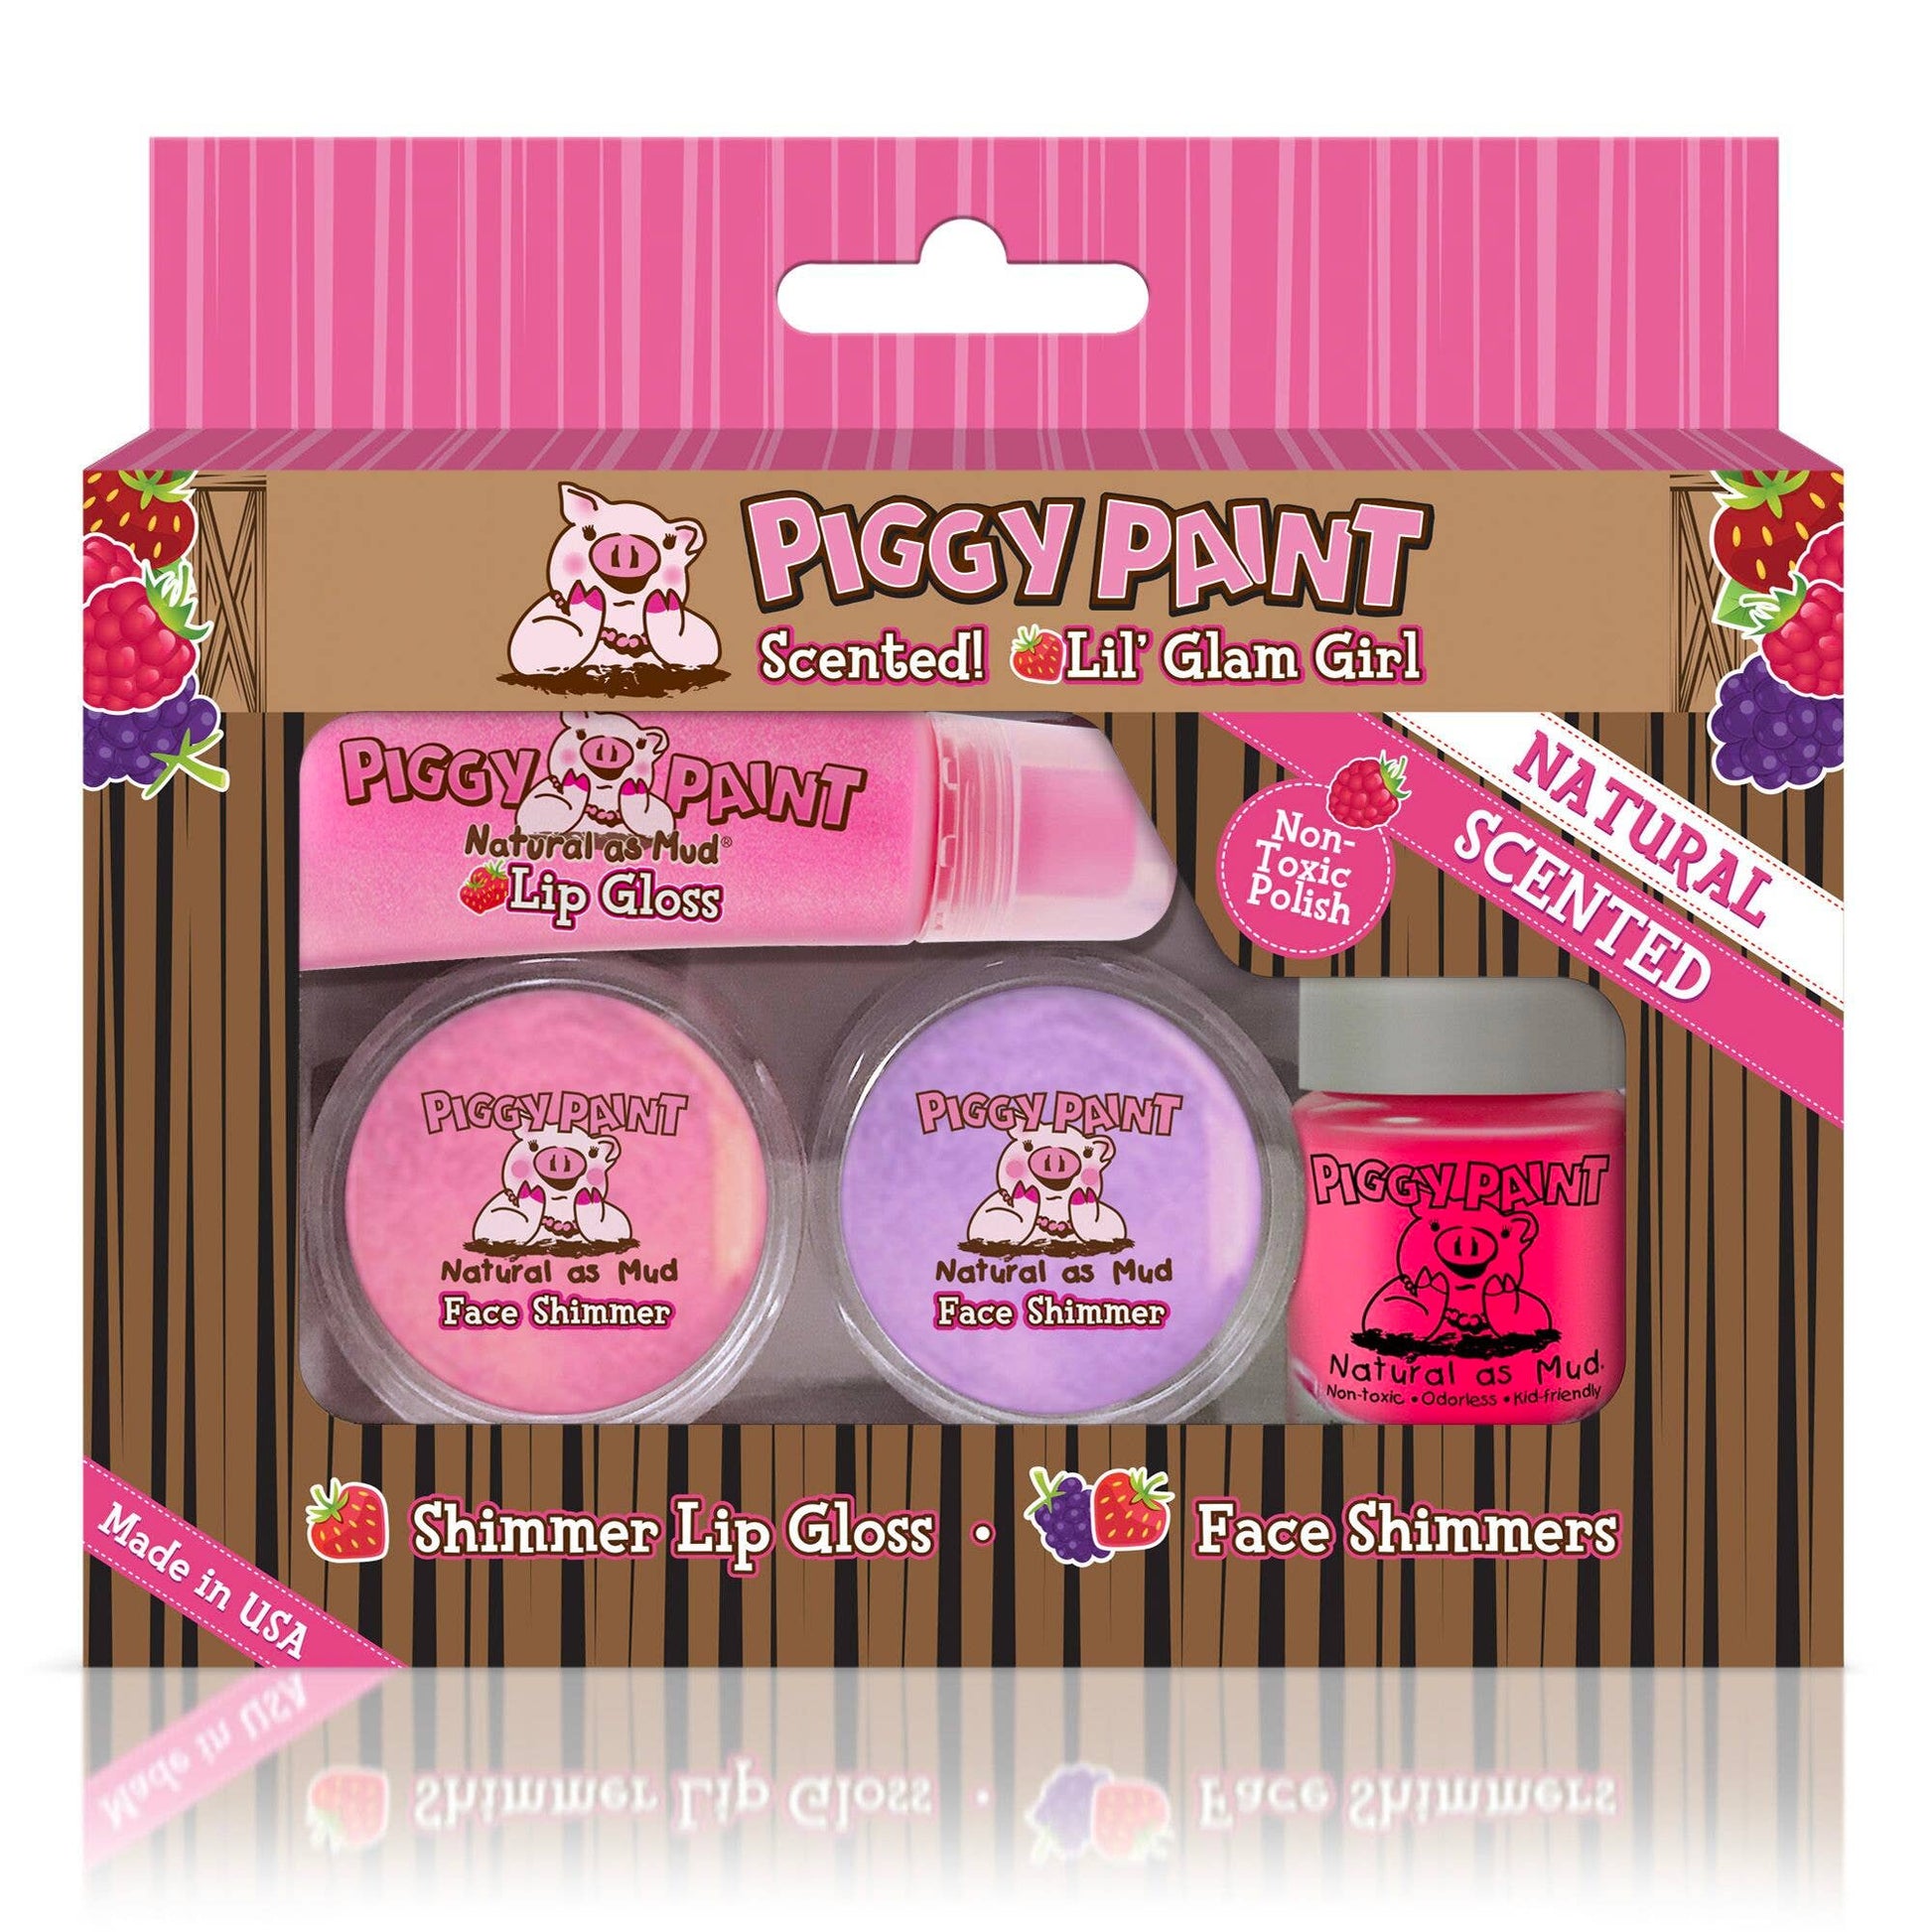 Piggy Paint scented glam girl set – The Original Childrens Shop